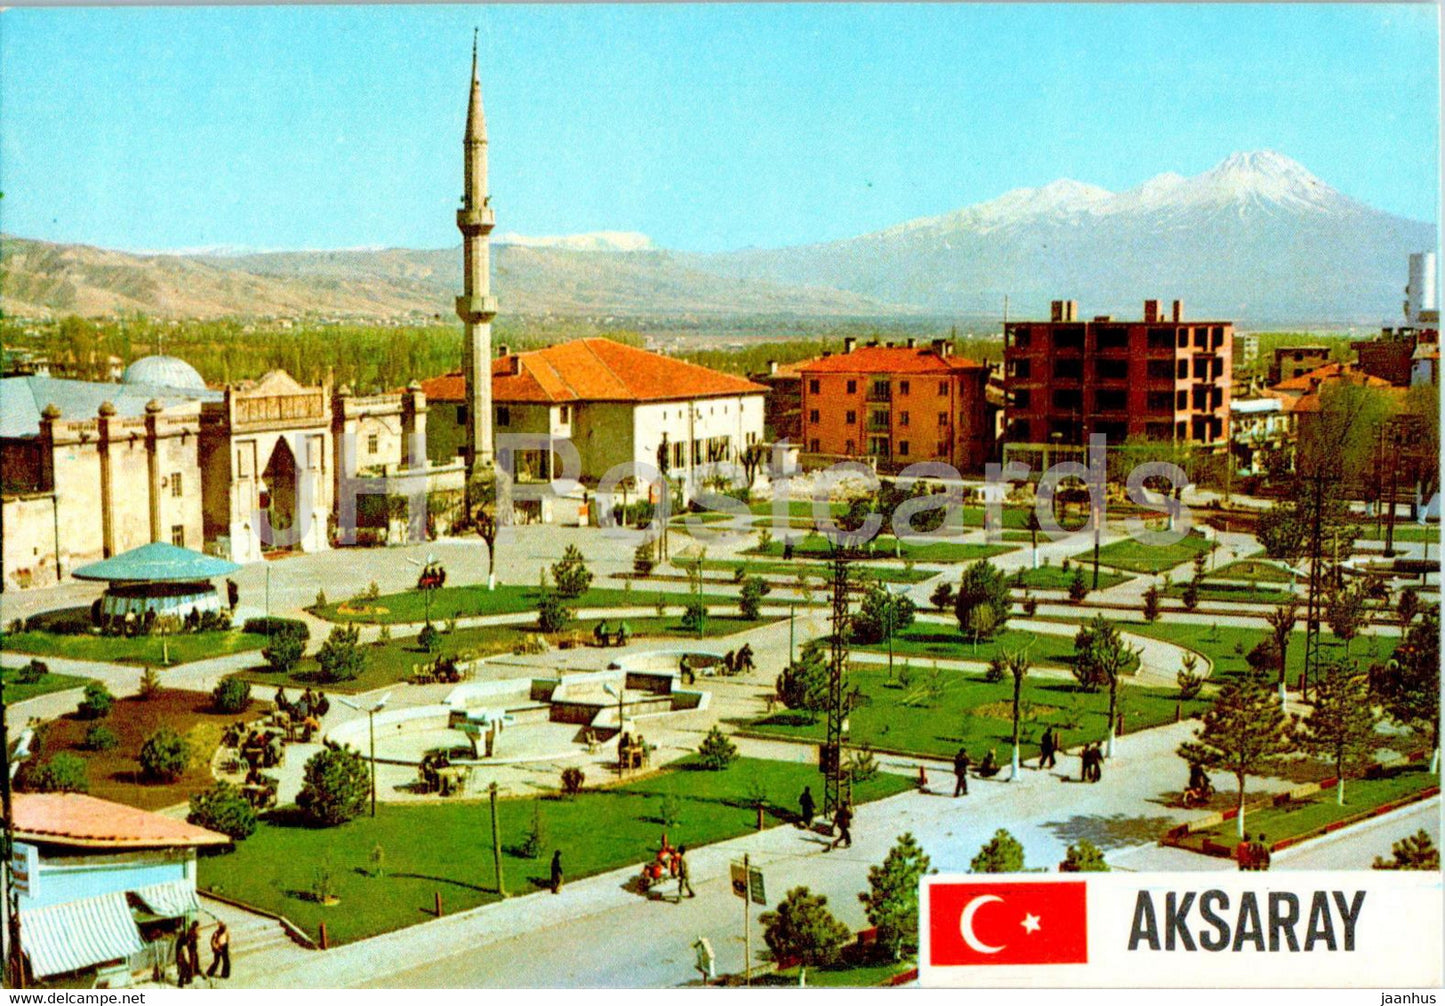 Aksaray - Park ve Ulu Camii'nin gorunusu - View of the Park and the Great Mosque - 51-3 - Turkey - unused - JH Postcards